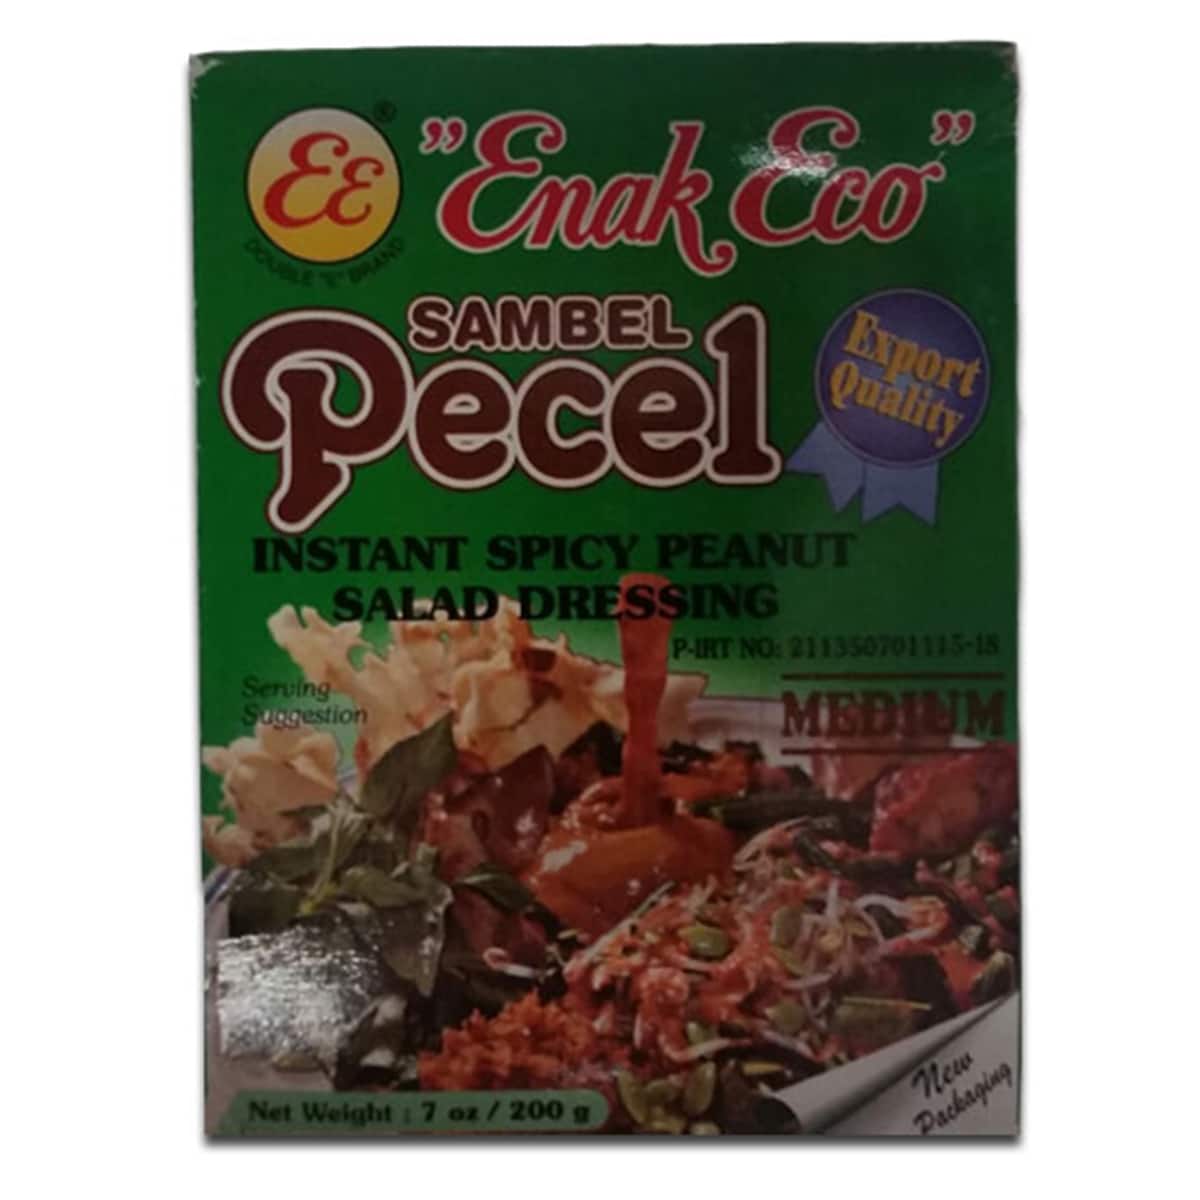 Buy Enak Eco Sambel Pecel (Instant Spicy Peanut Salad Dressing) Medium - 200 gm